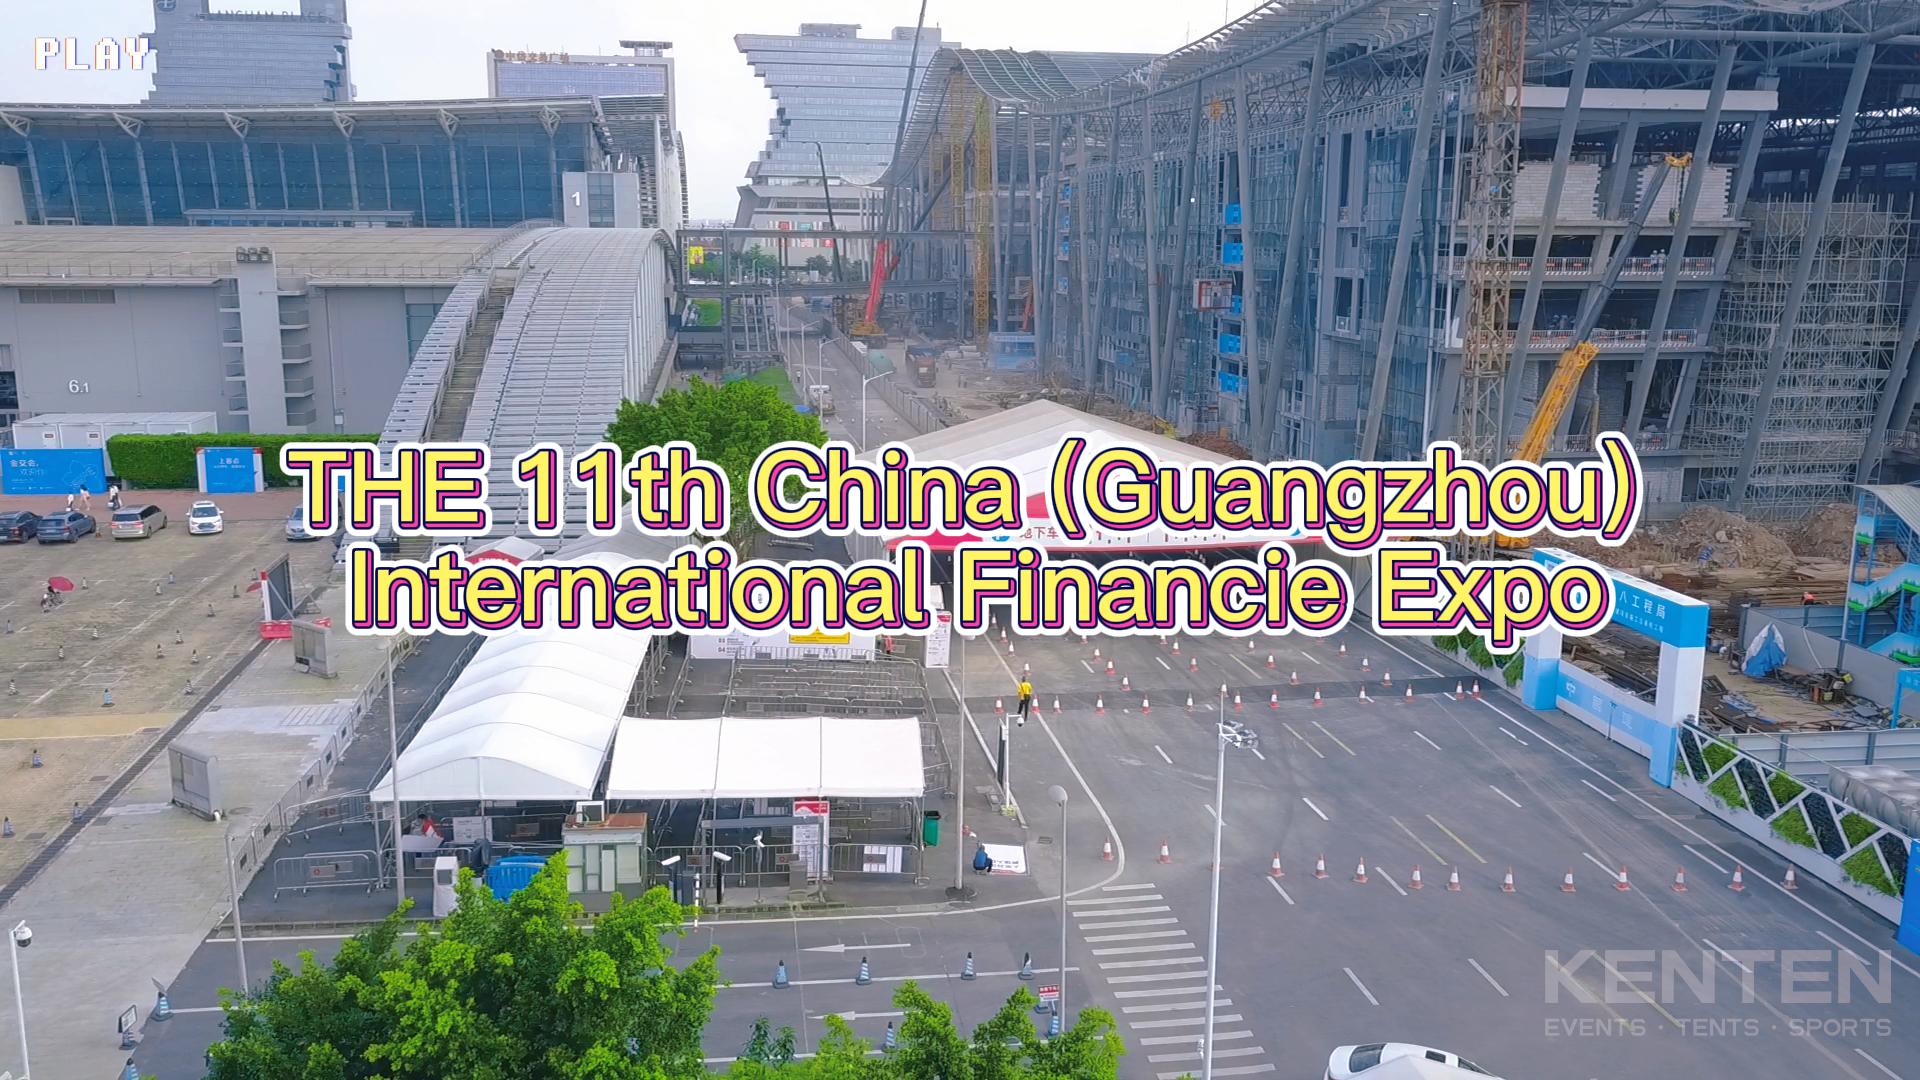 THE 11th China International Financie Expo 2022 - Video